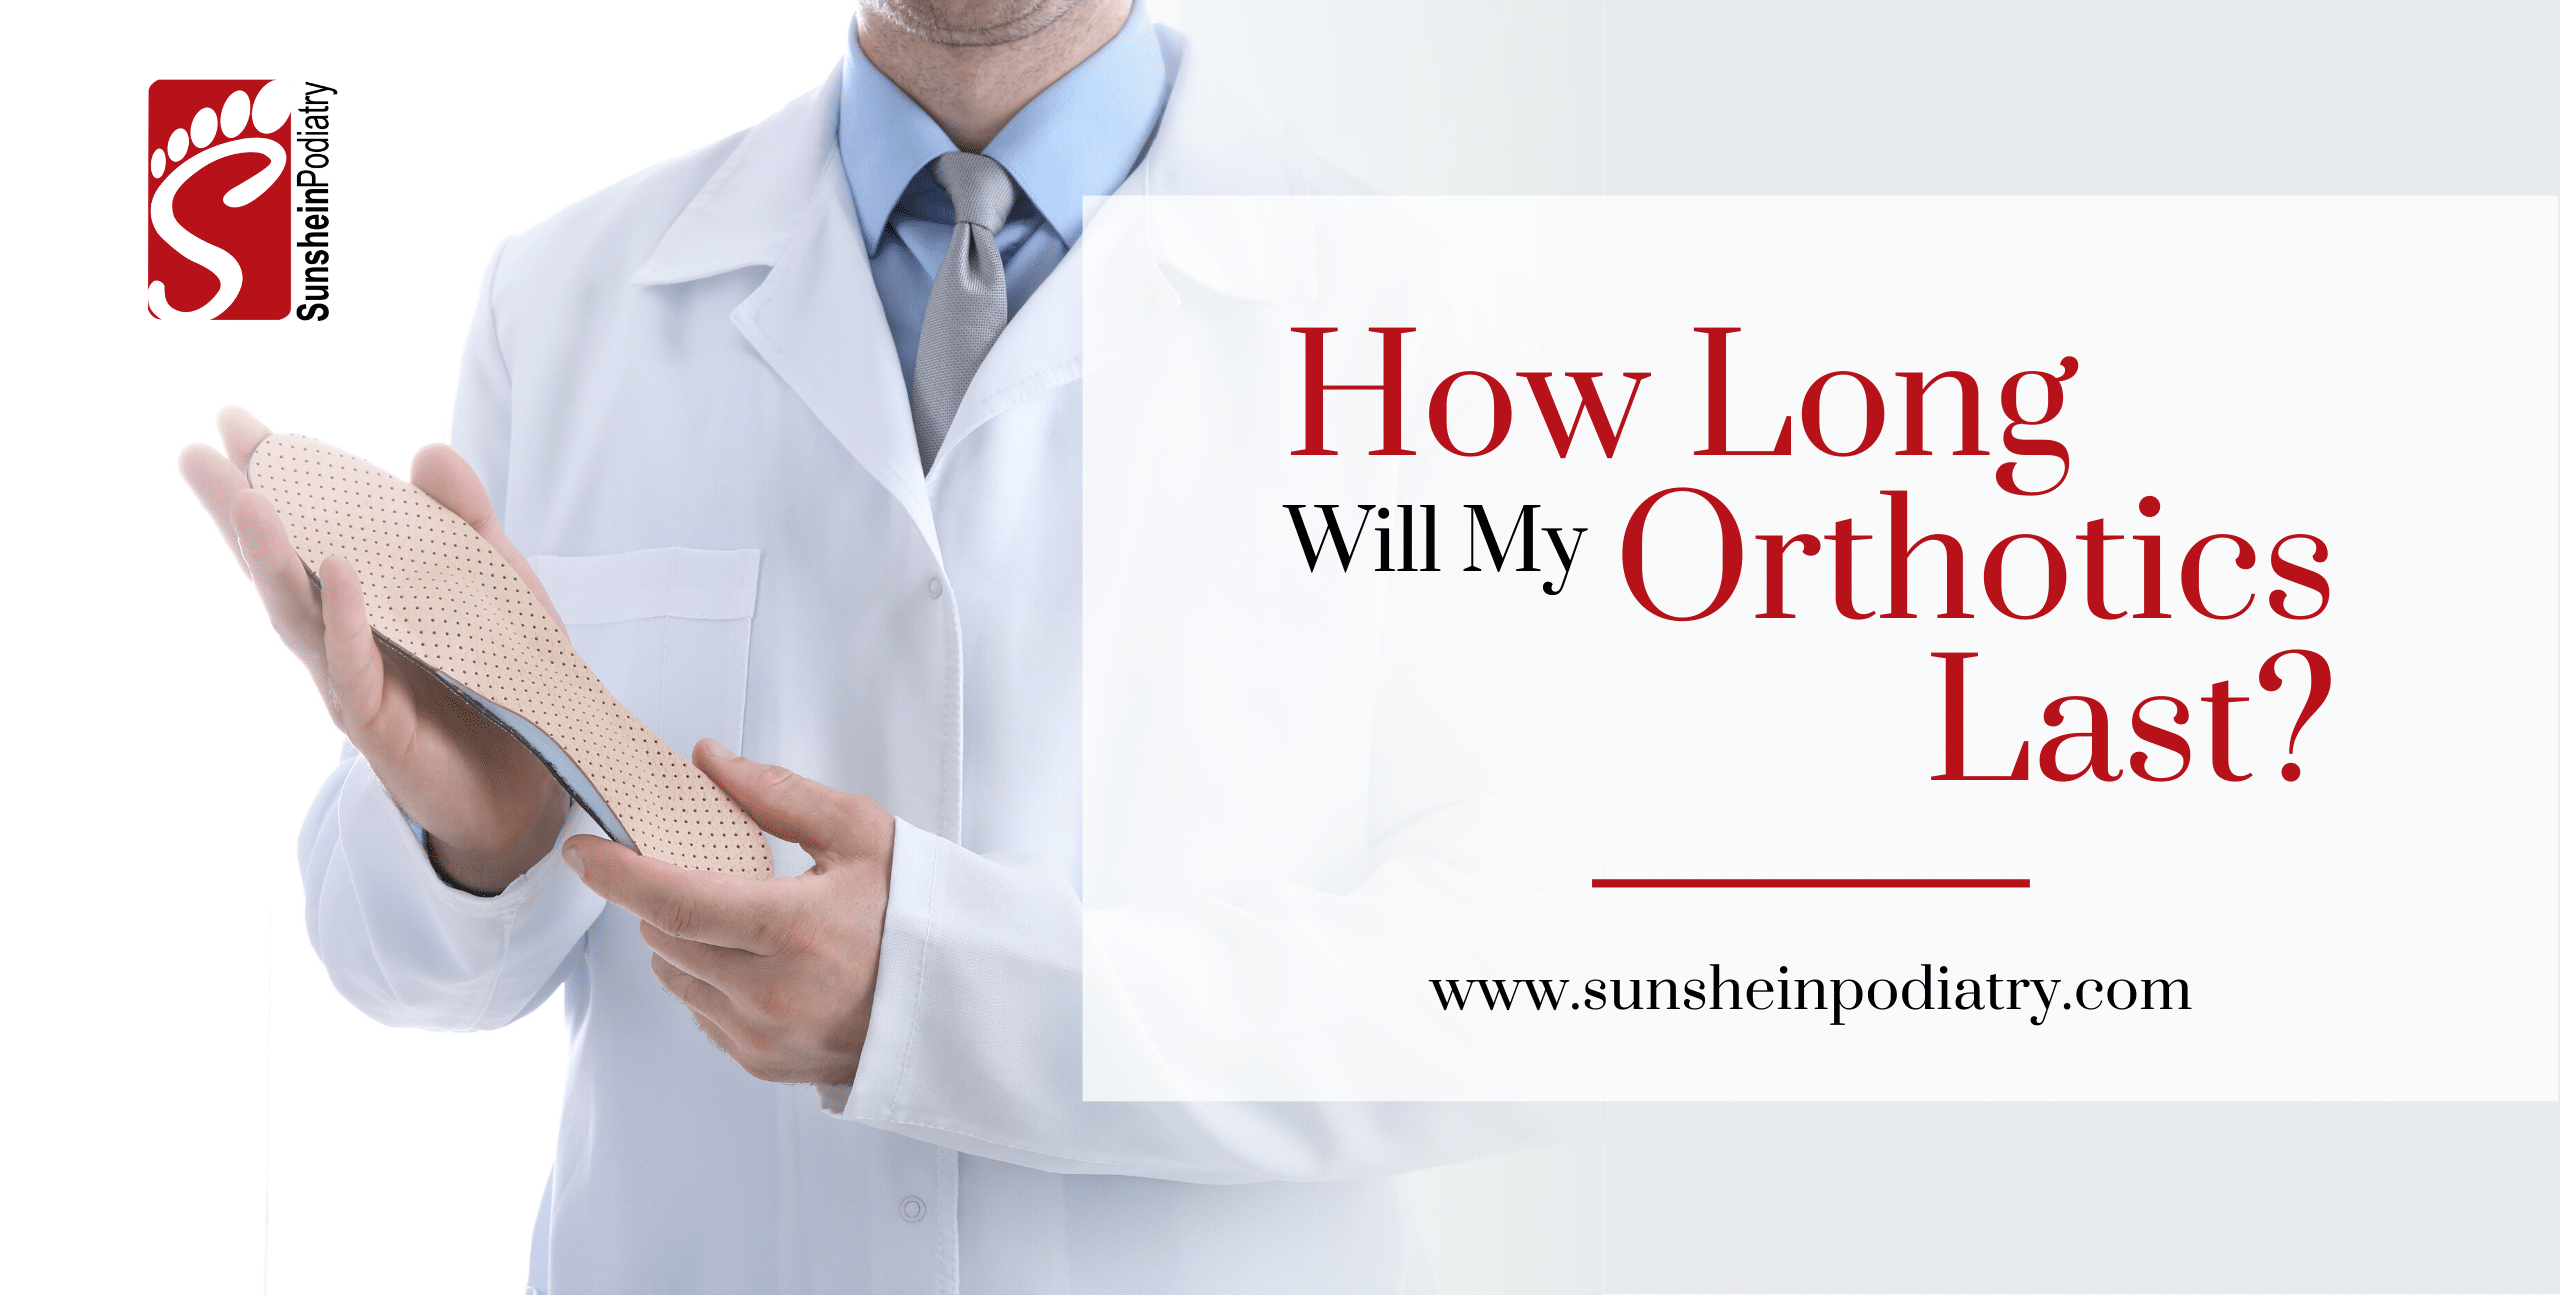 How Long Will My Orthotics Last?